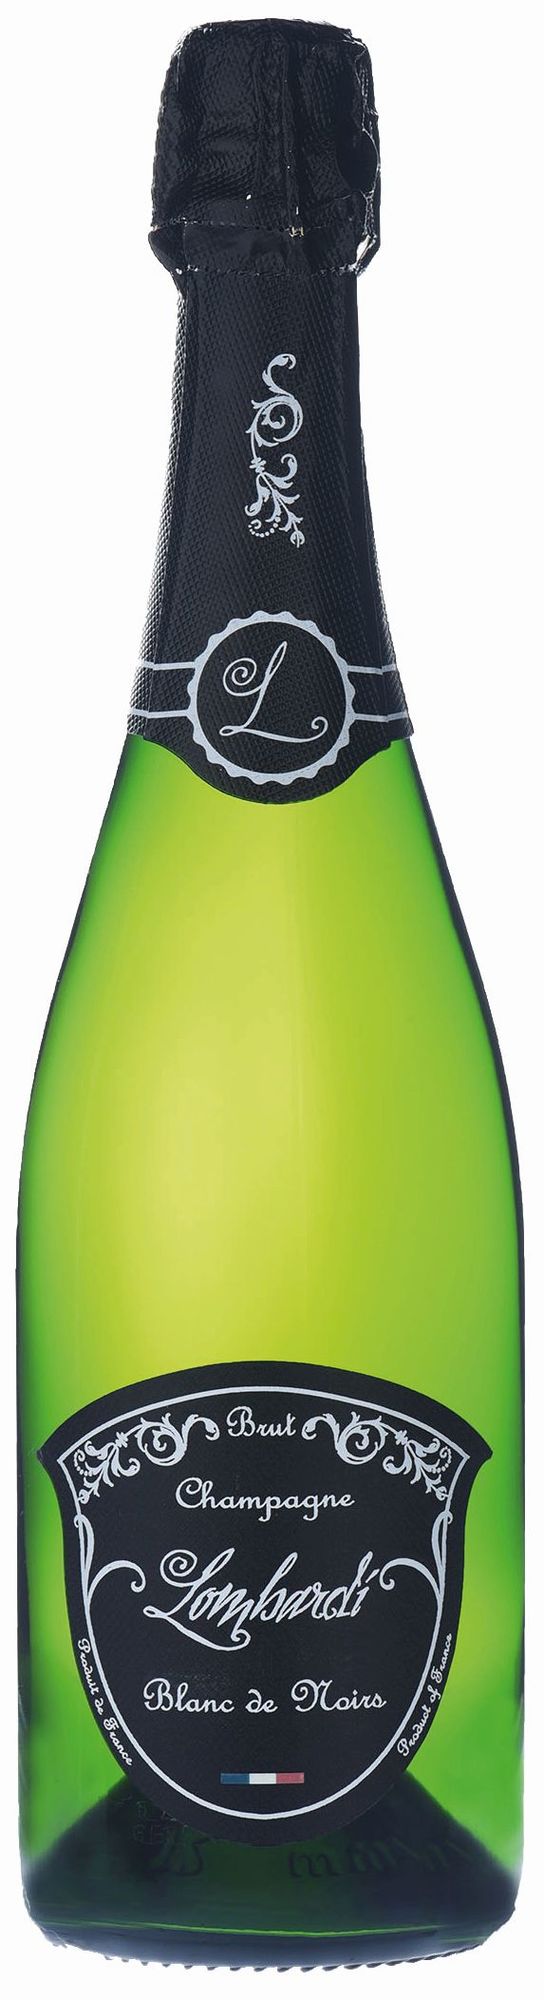 Champagne Lombardi Blanc de Noirs Brut Champagner, 0,75Ltr